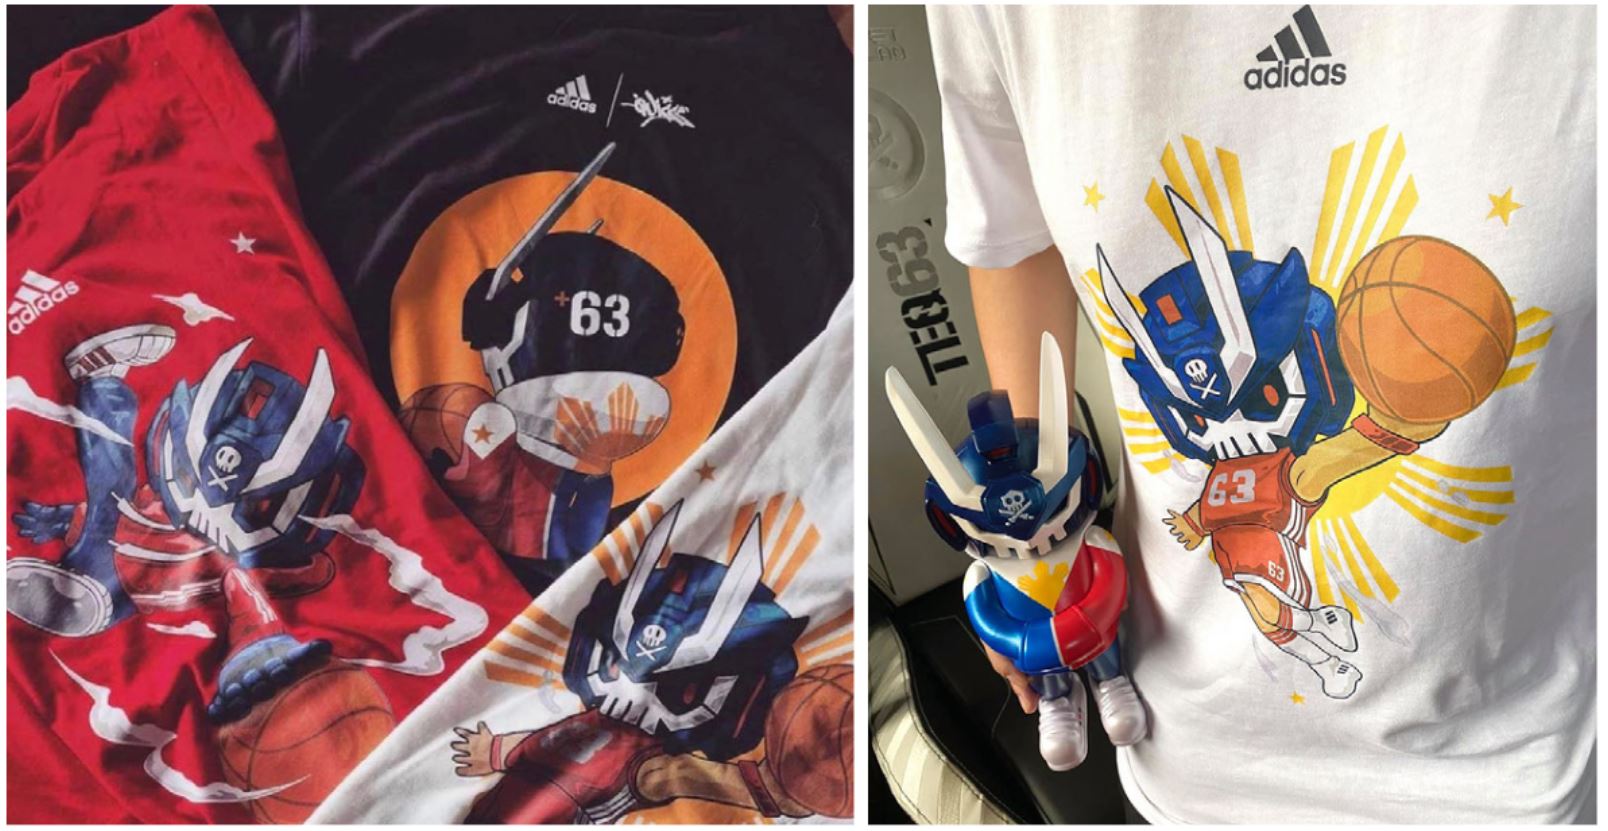 Adidas Manila-inspired shirts